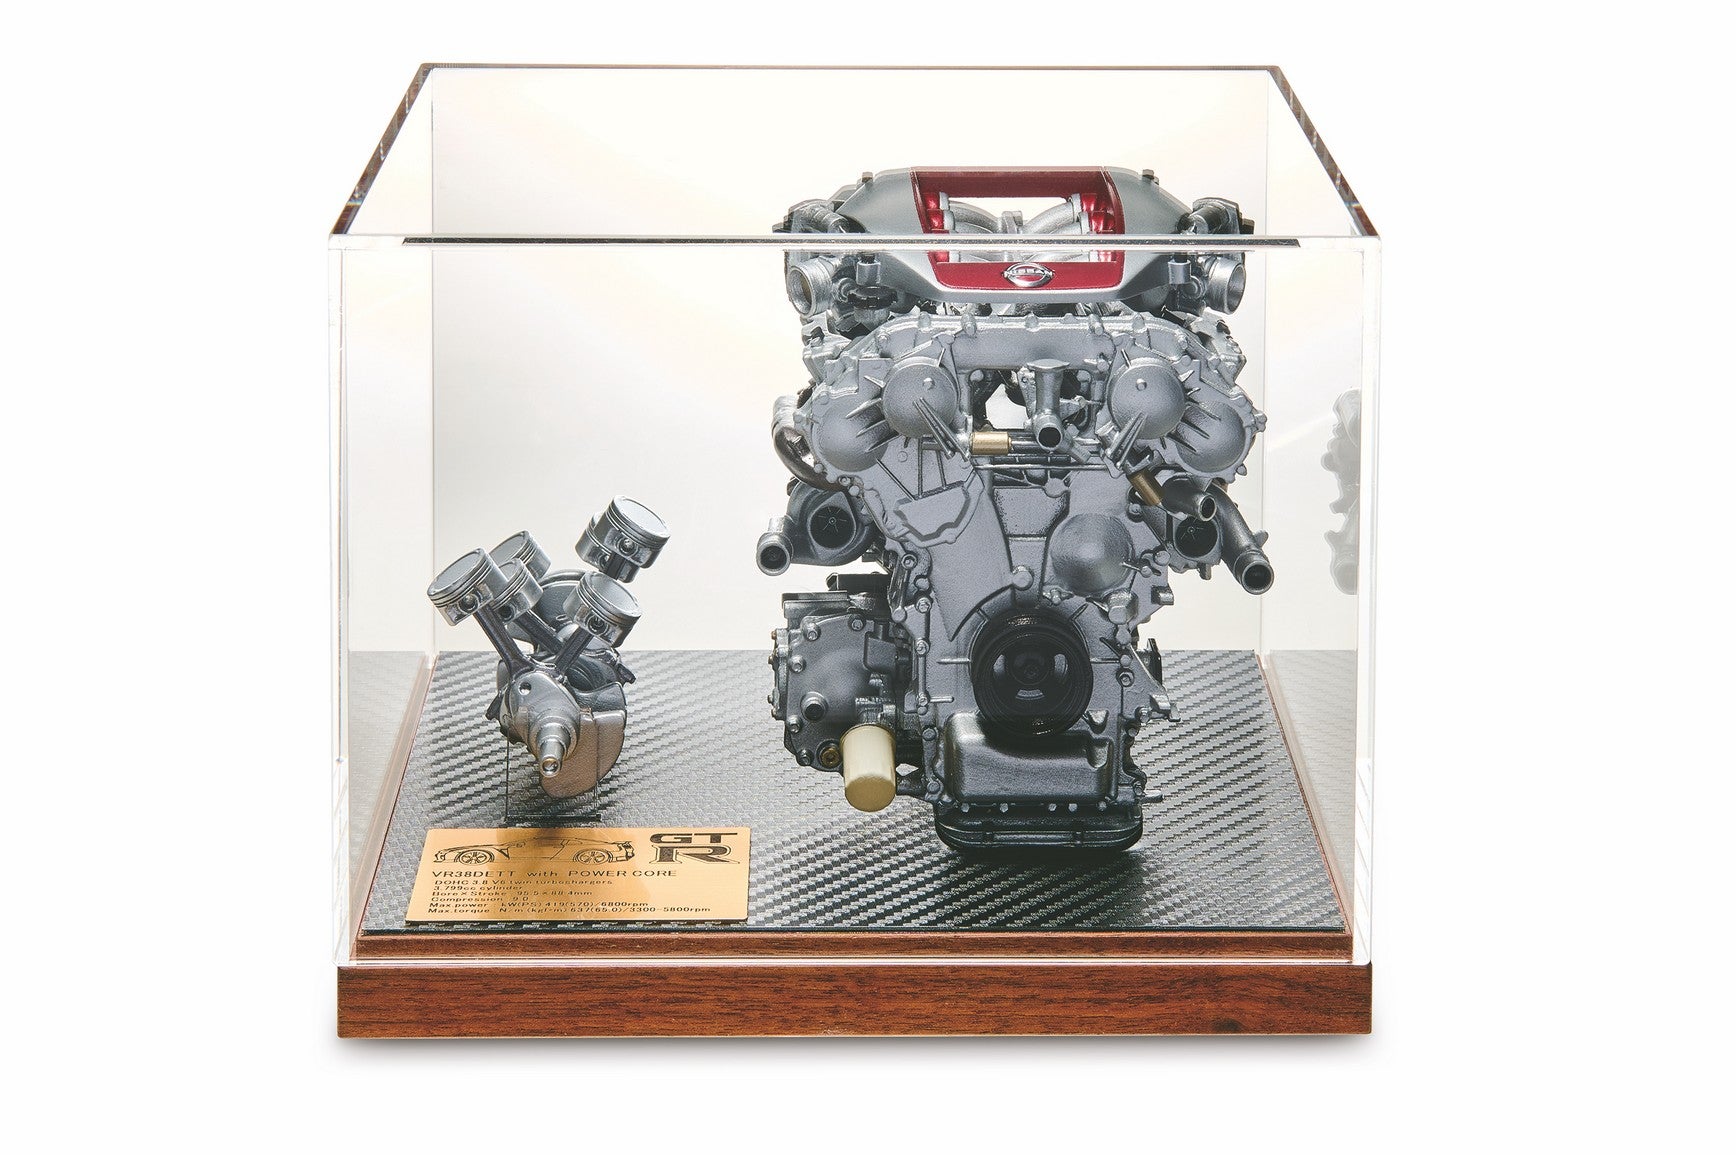 NISSAN VR38DETT Engine & Power Core Model Miniature ##663191626